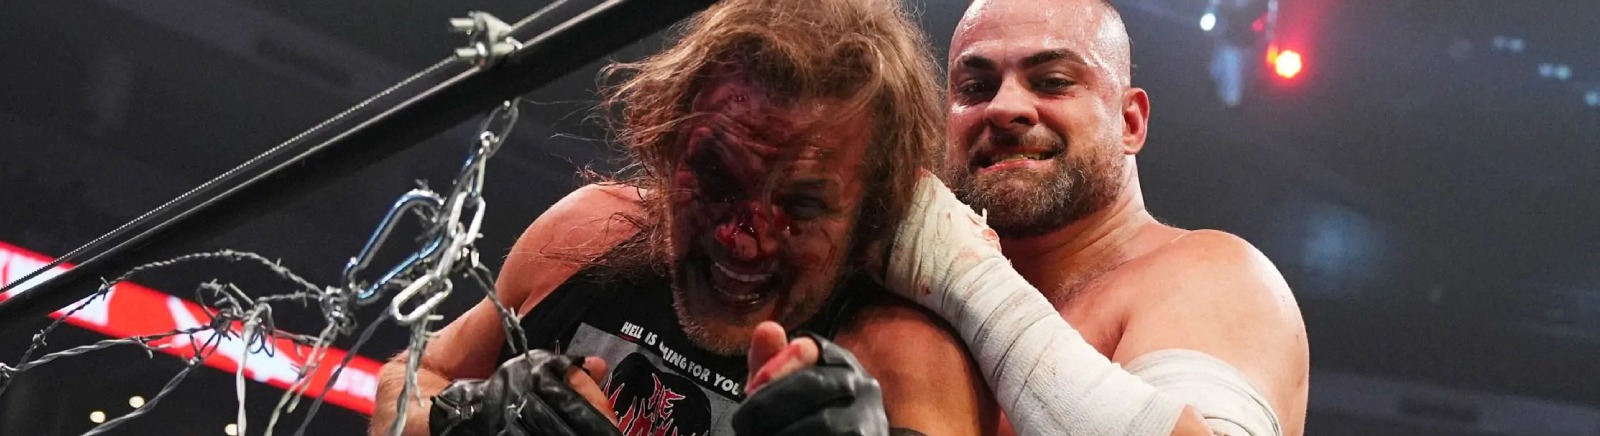 VS-Подкаст 392: Новый титул WWE, Стронг в AEW, Травмы в NXT, Наоми в Impact